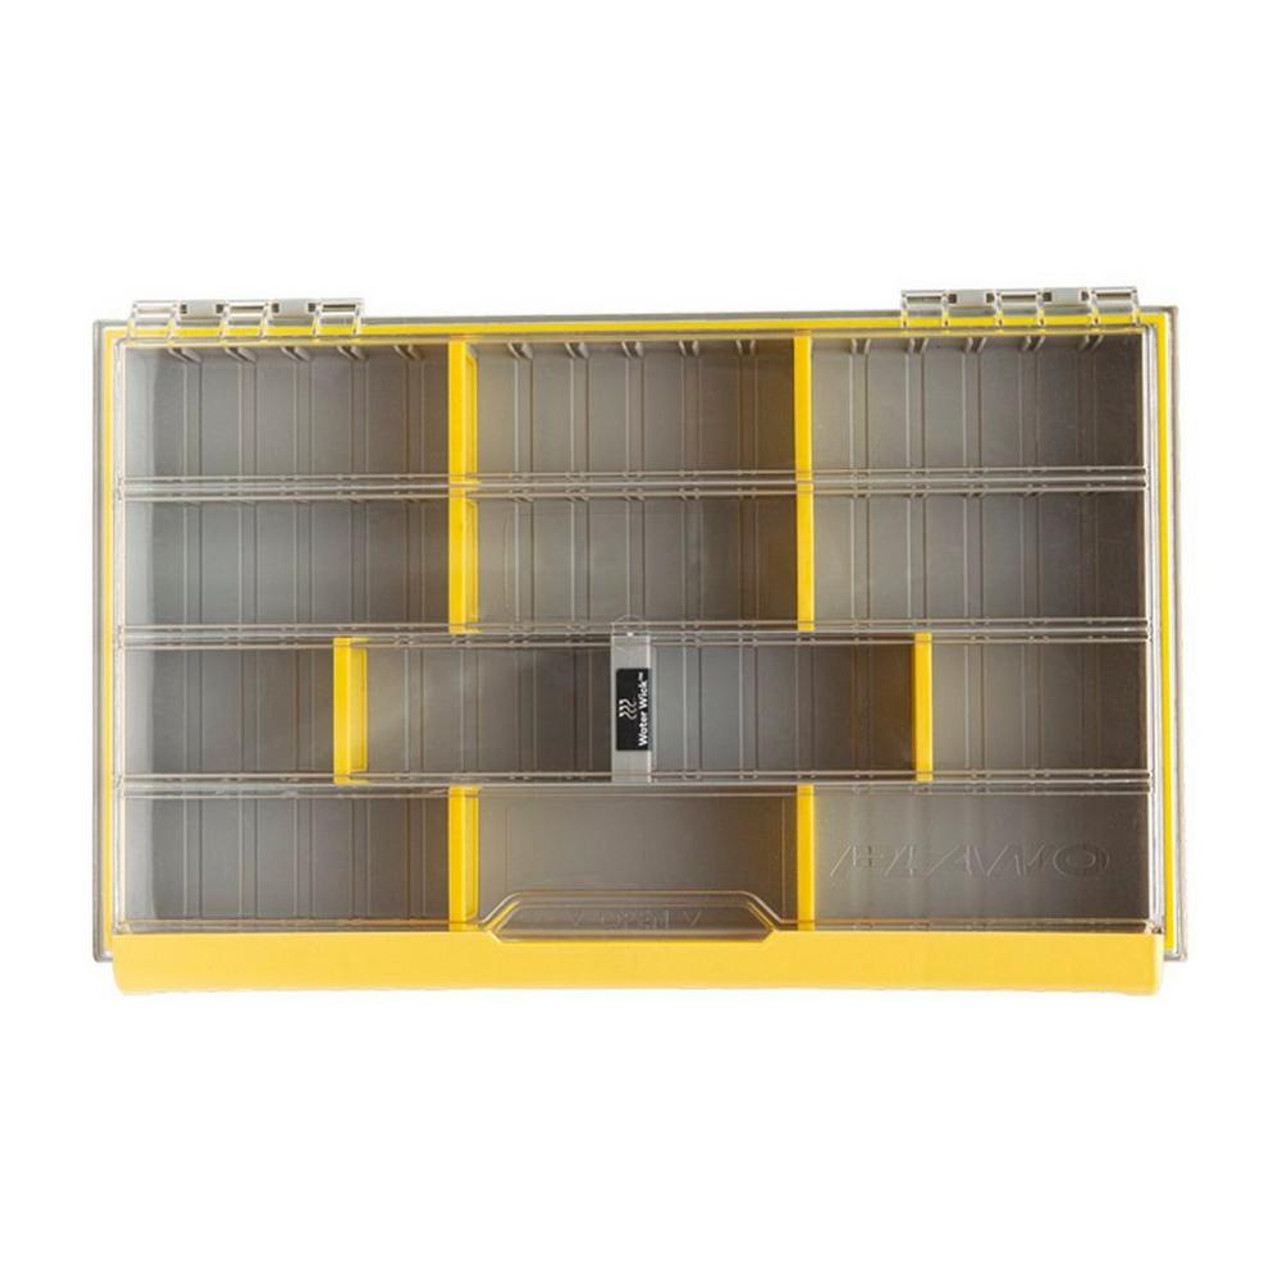 Plano storage box review - 3700 Stowaway, 3700 Rustrictor, 3700